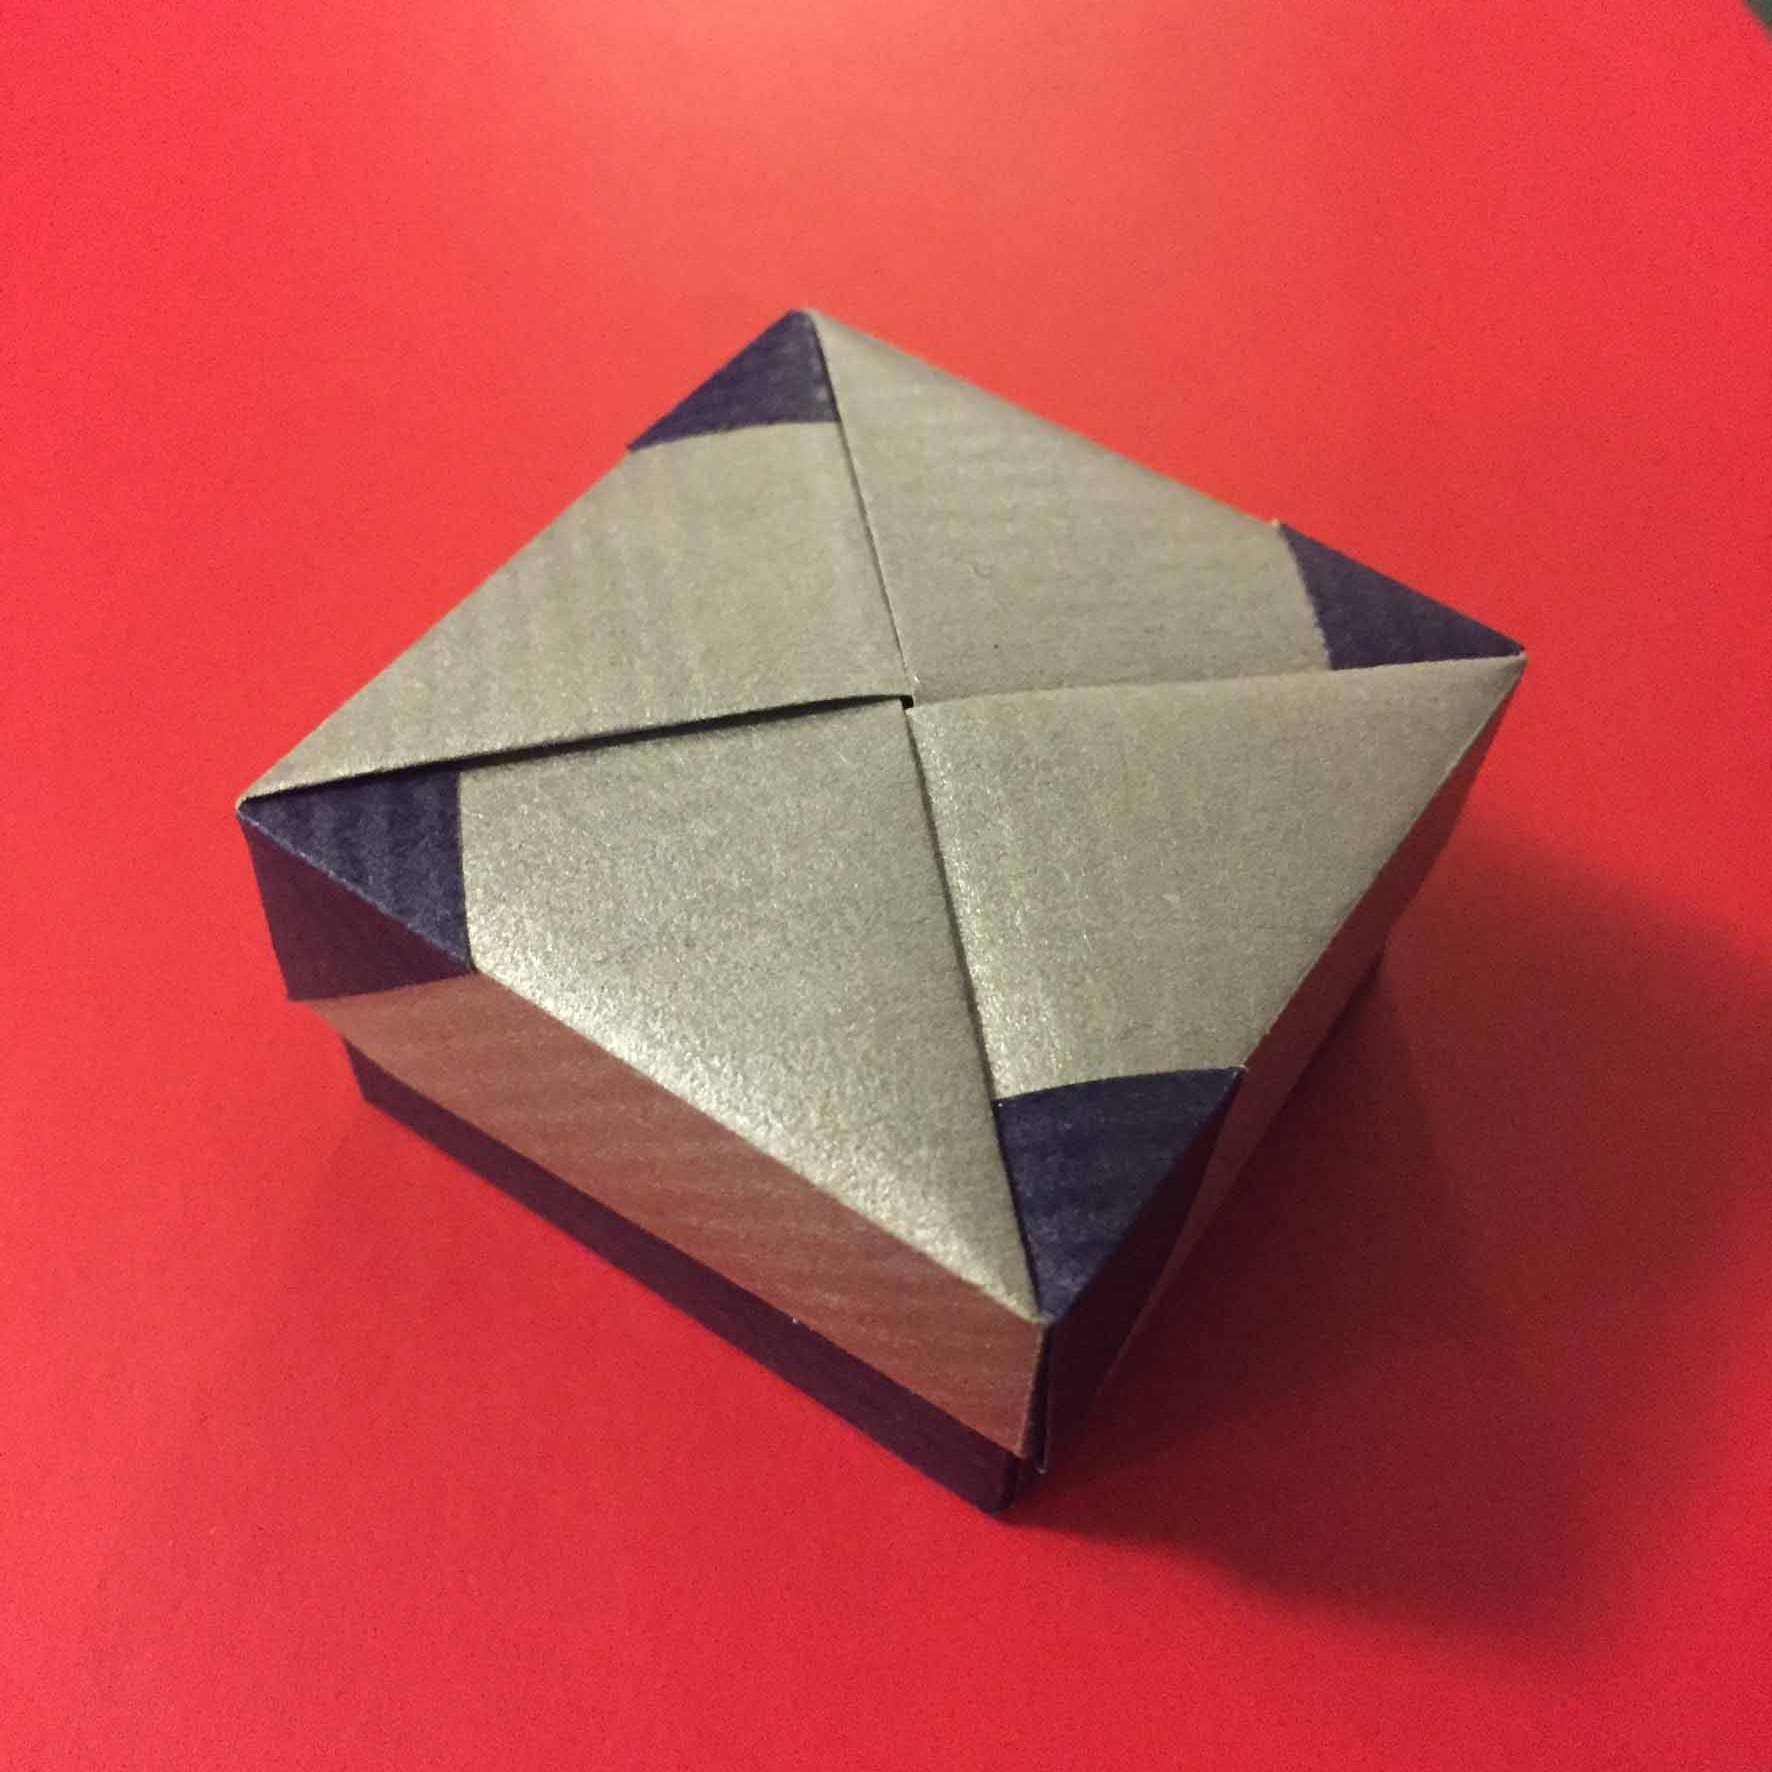 Square box with corners